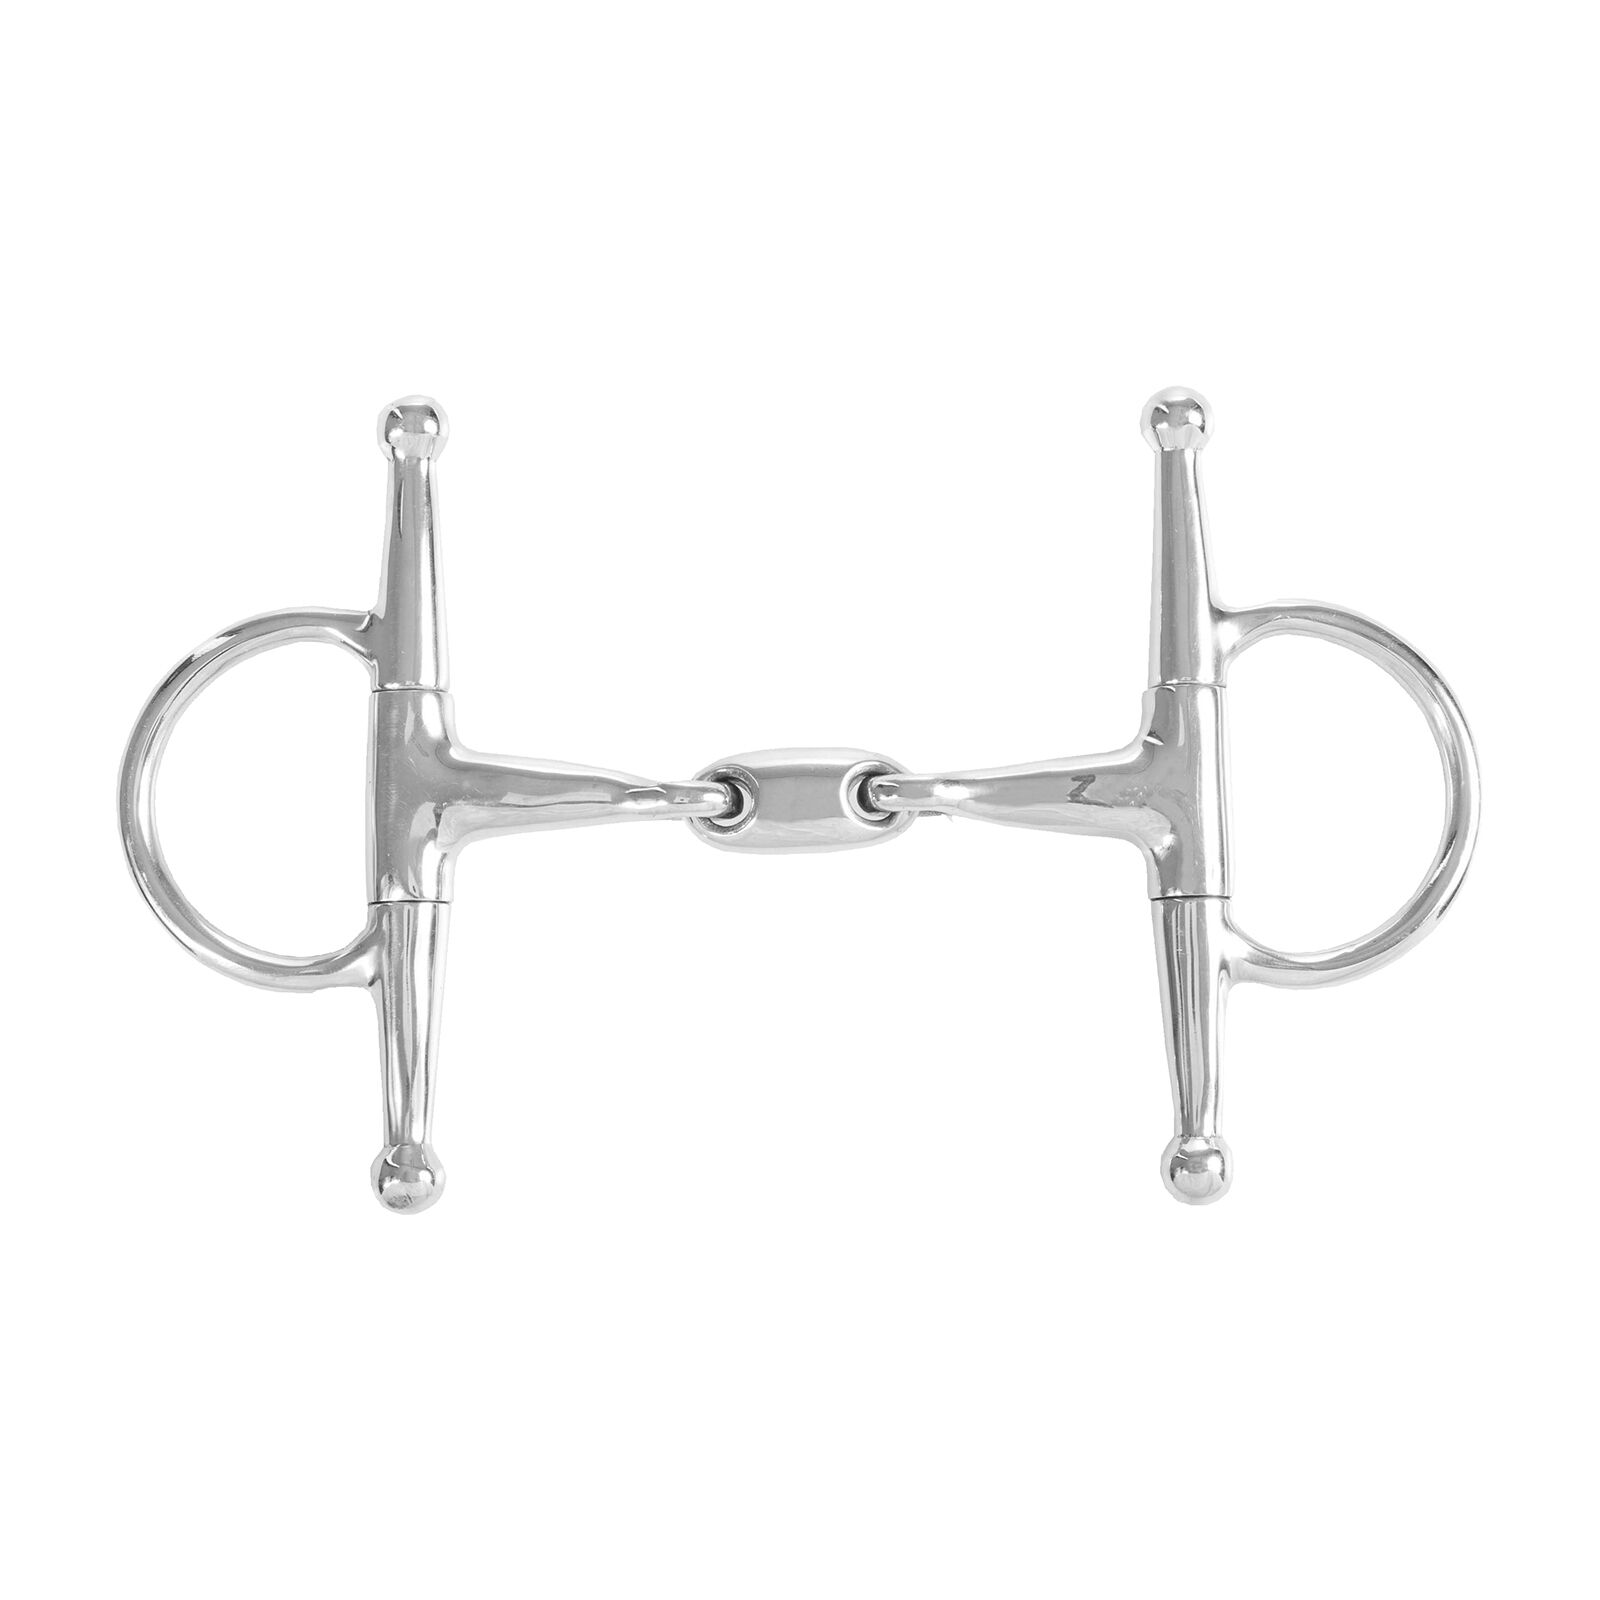 Poponcini Harmony D Ring | EquuSport Custom Saddlery